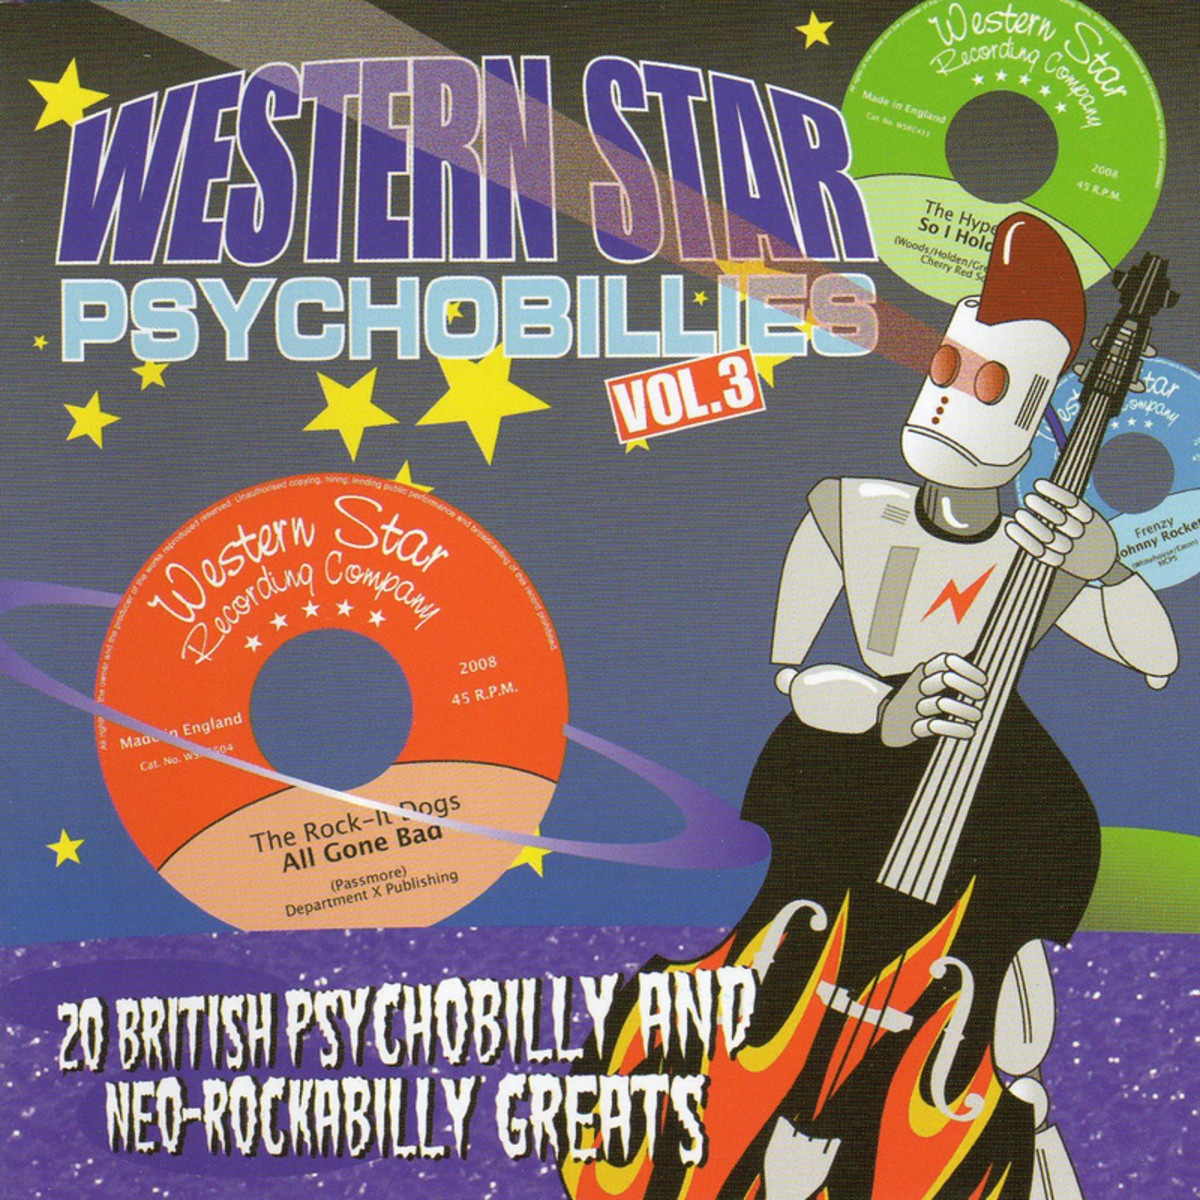 Western Star Psychobillies Vol. 3